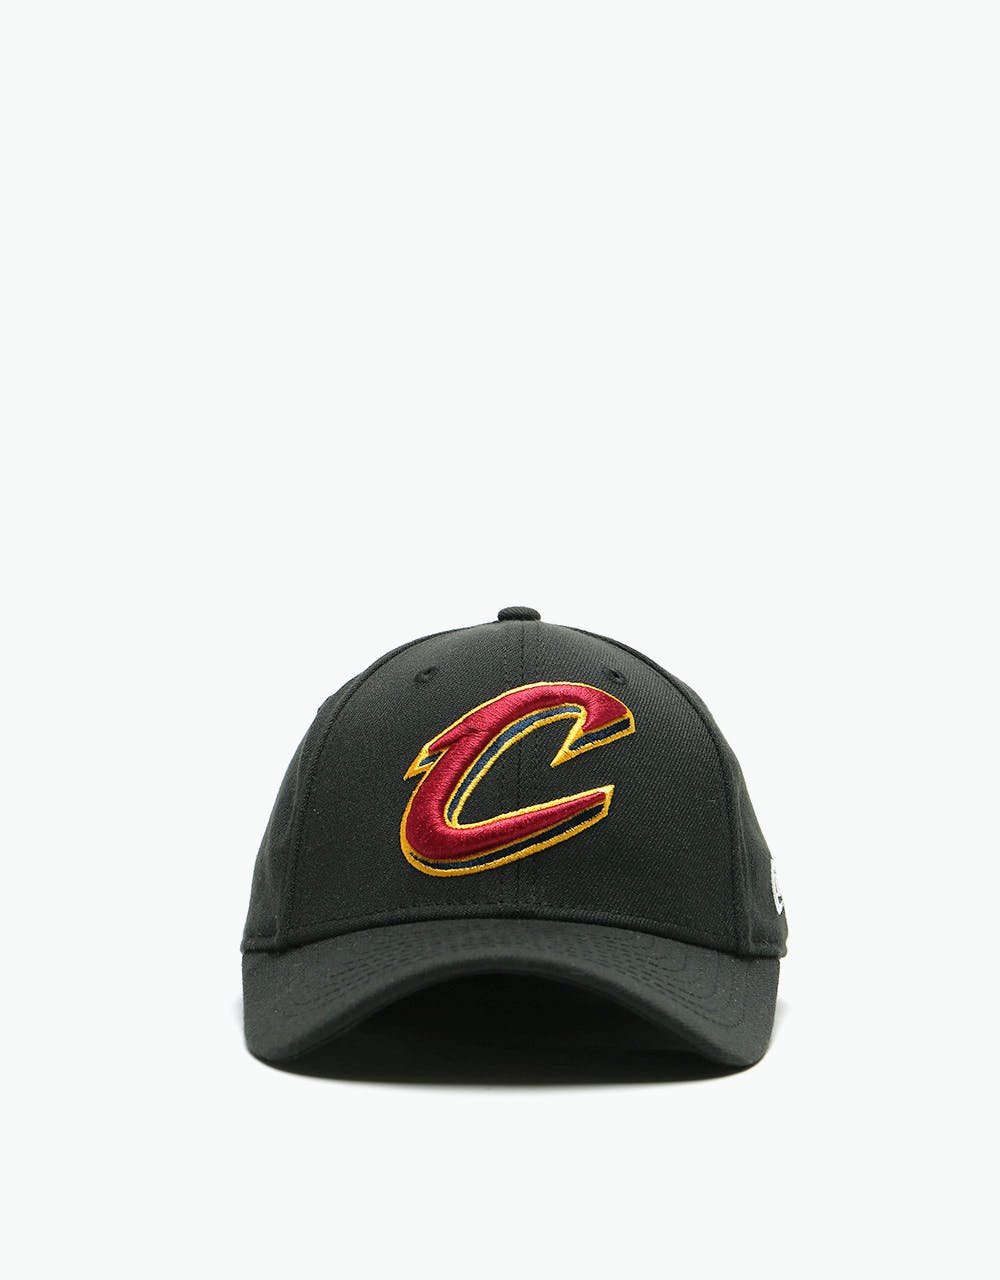 New Era 9Fifty NBA Cleveland Cavaliers Stretch Cap - Black